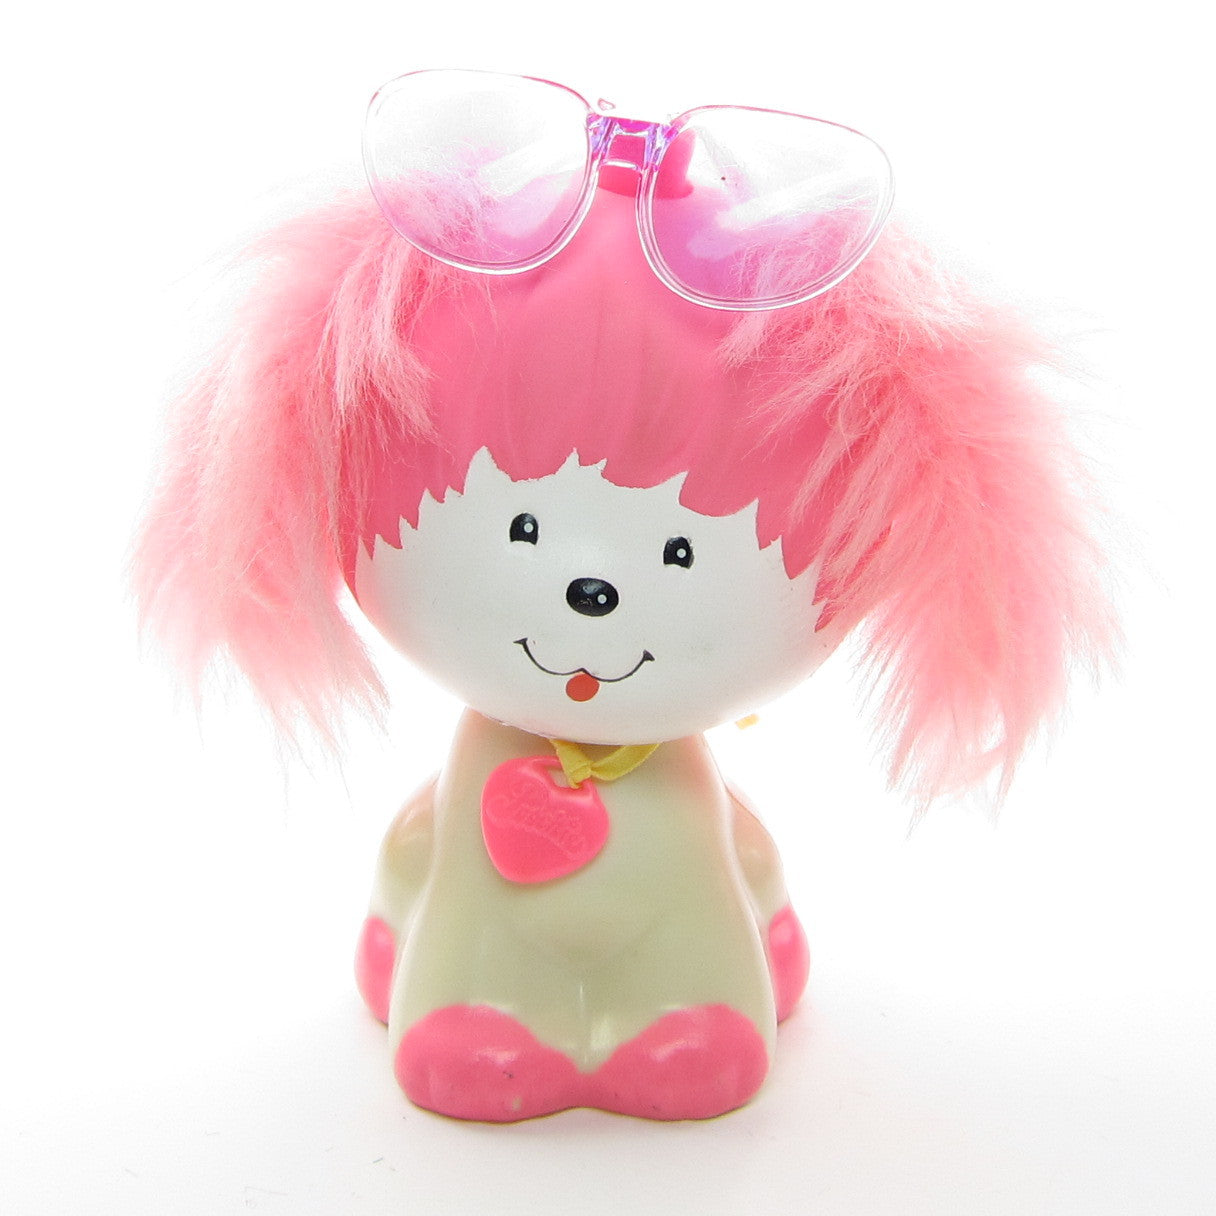 Poochie Stamper Paws plush pink poodle toy